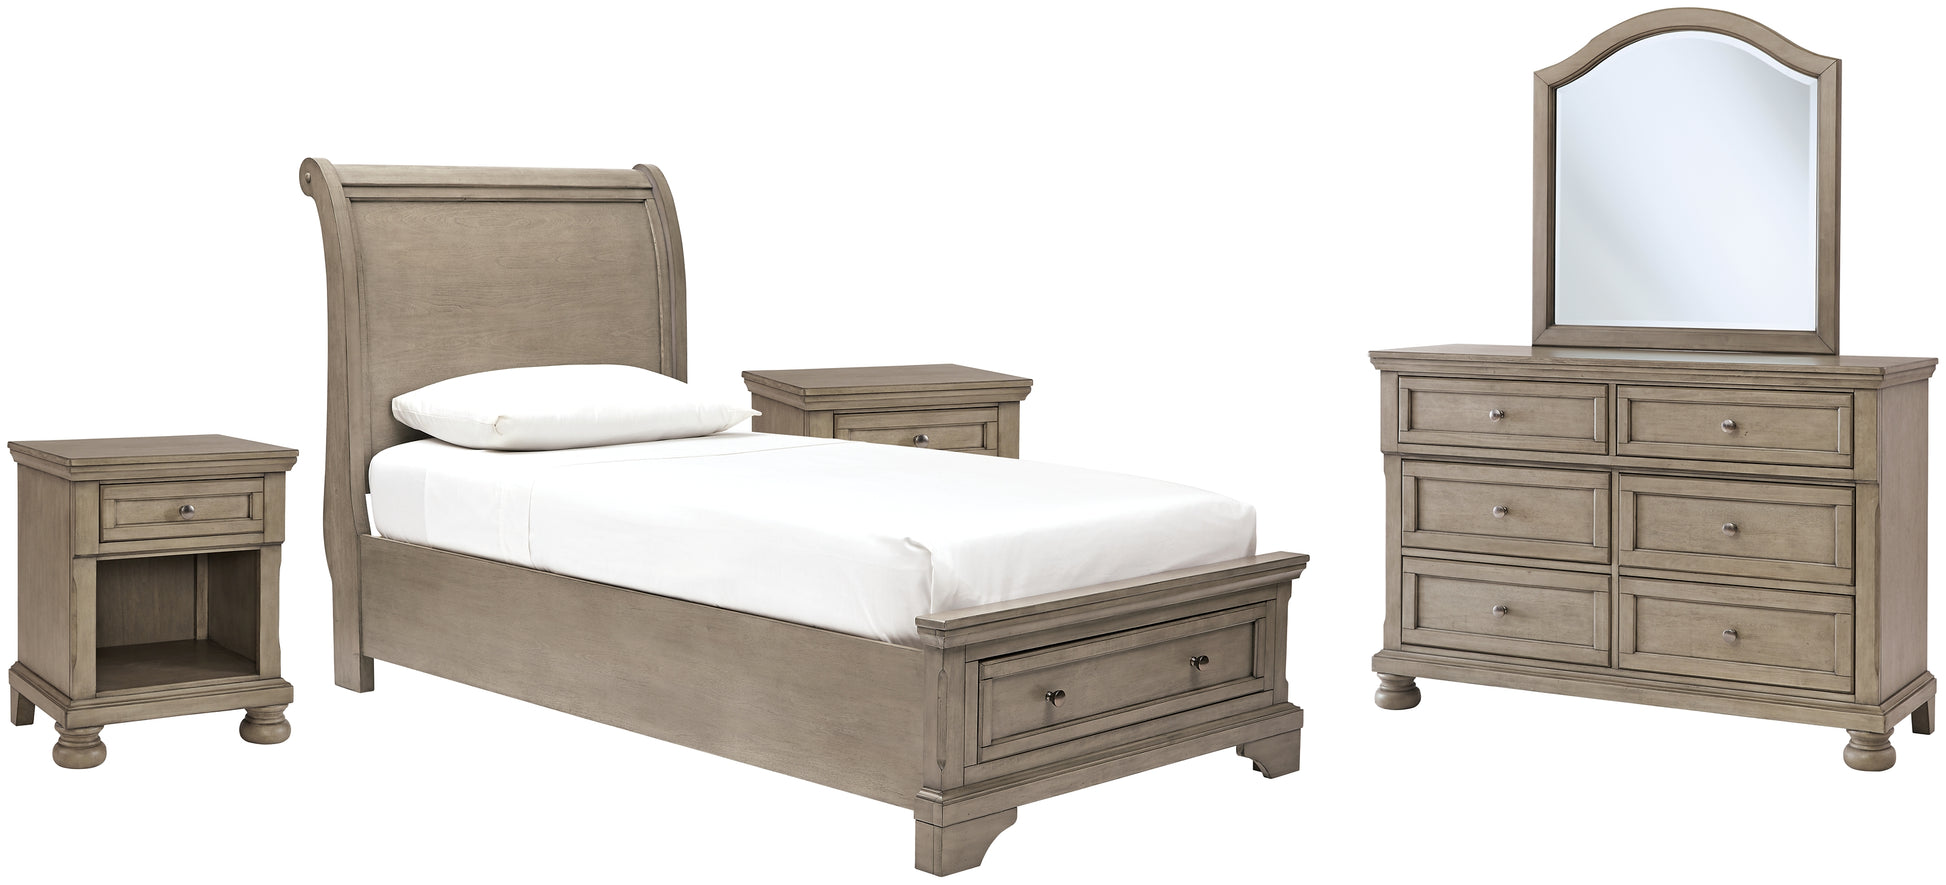 Lettner Twin Sleigh Bed with Mirrored Dresser and 2 Nightstands Wilson Furniture (OH)  in Bridgeport, Ohio. Serving Bridgeport, Yorkville, Bellaire, & Avondale